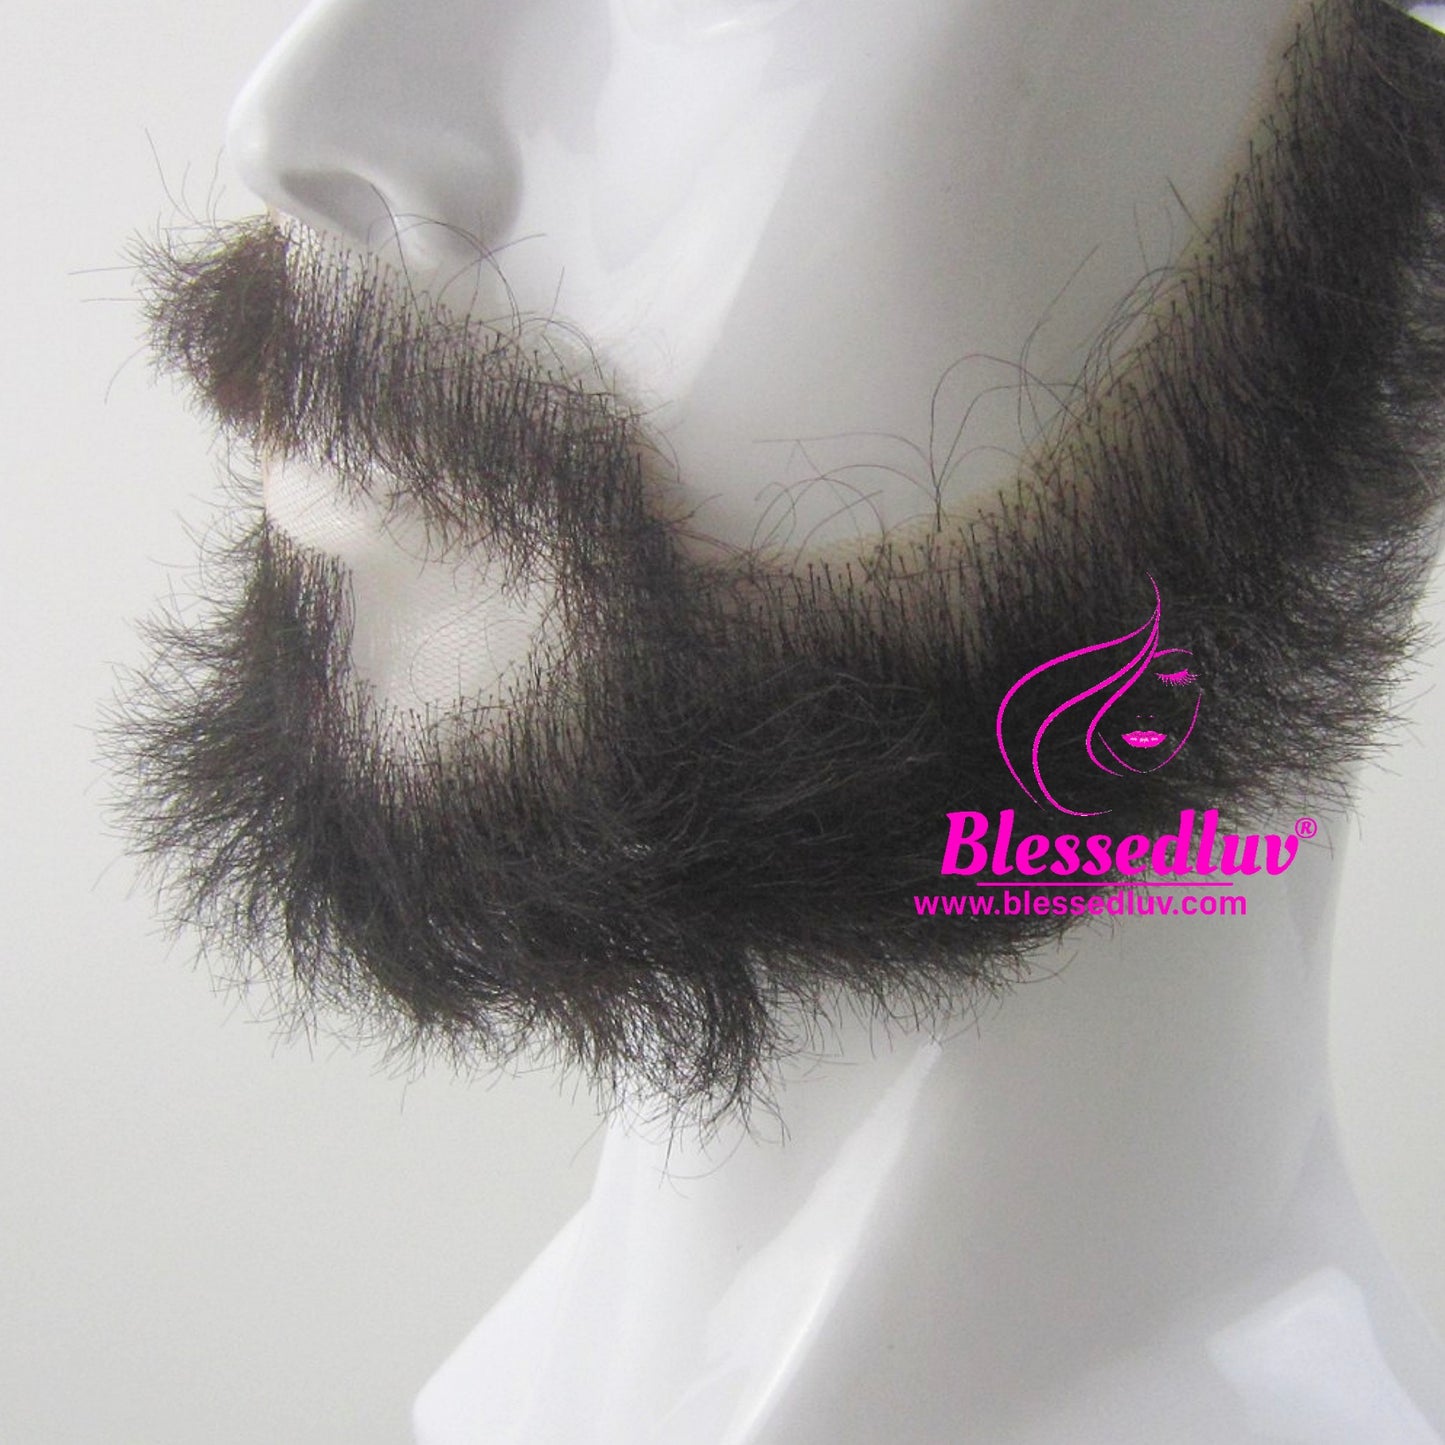 David - Lace Man Beard Lace Moustache-Blessedluv.com-Brazilianweave.com